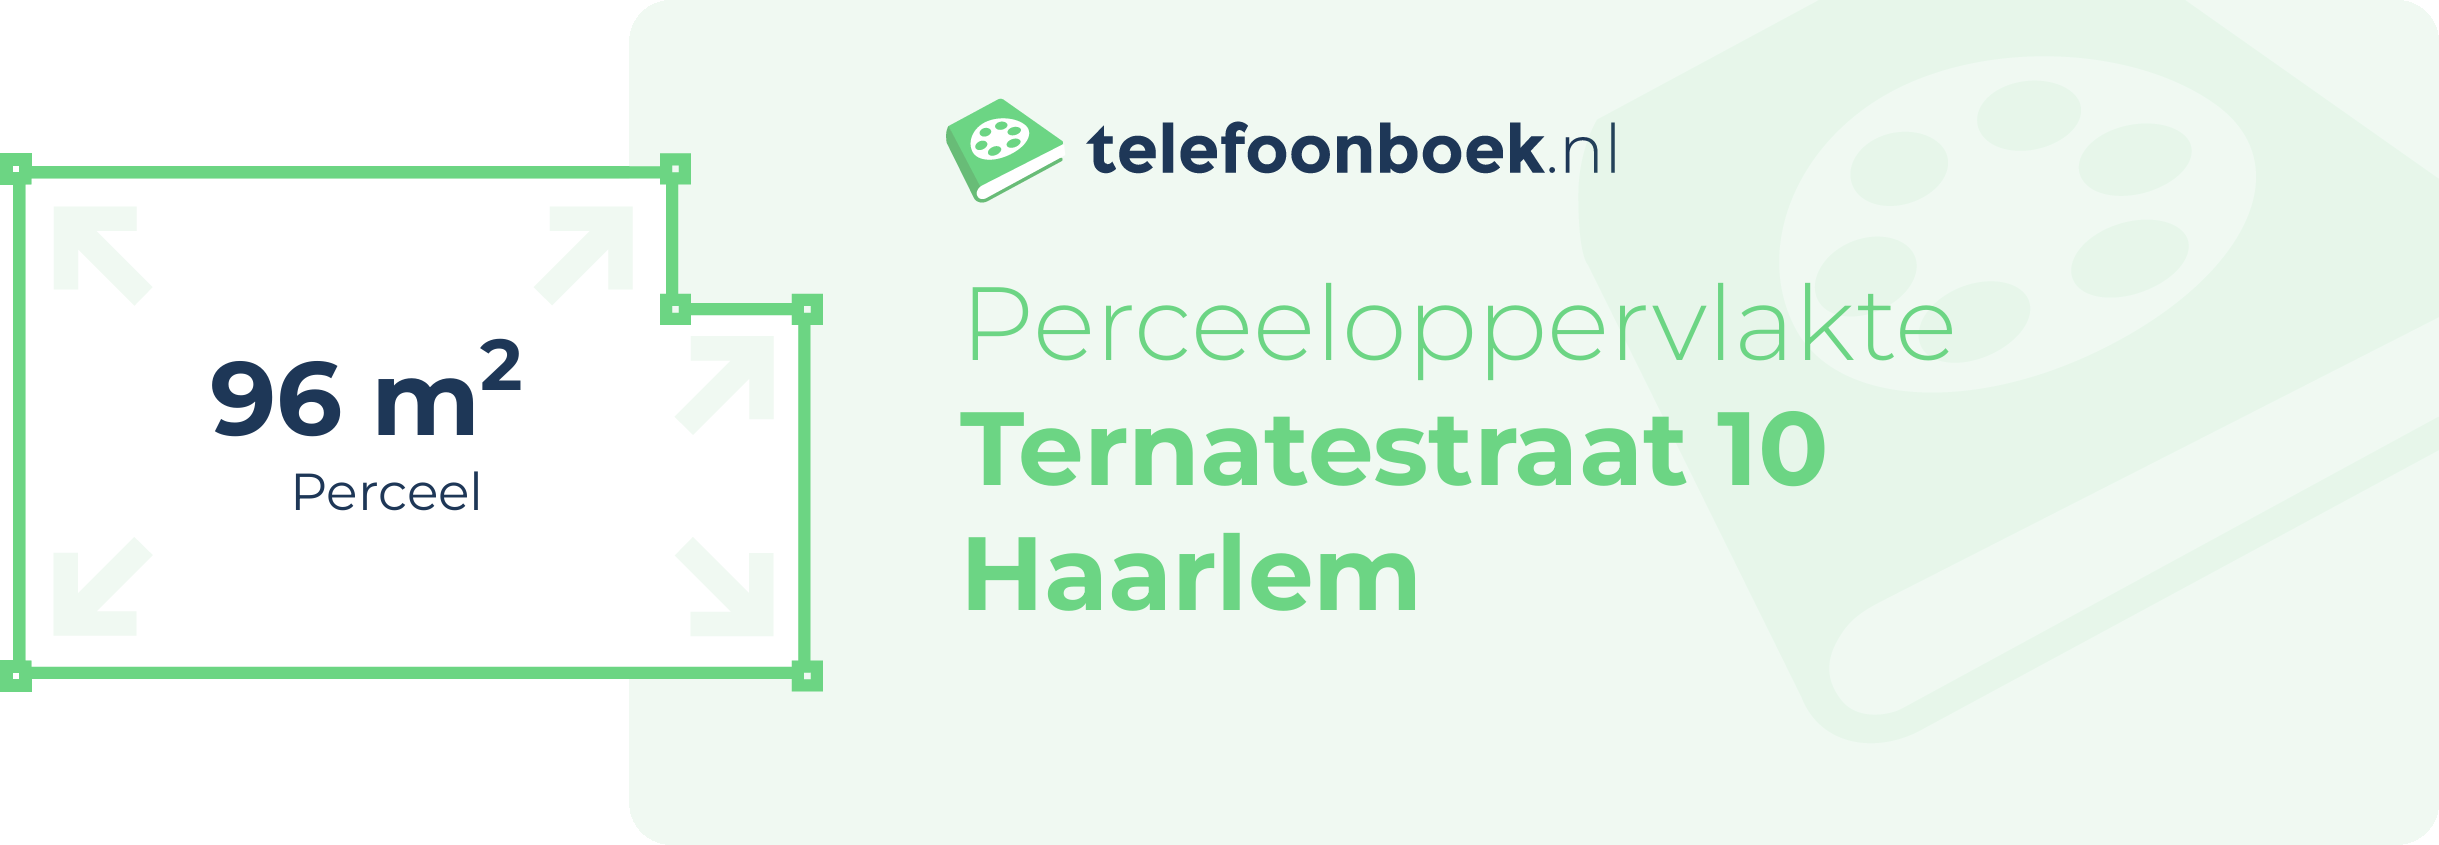 Perceeloppervlakte Ternatestraat 10 Haarlem